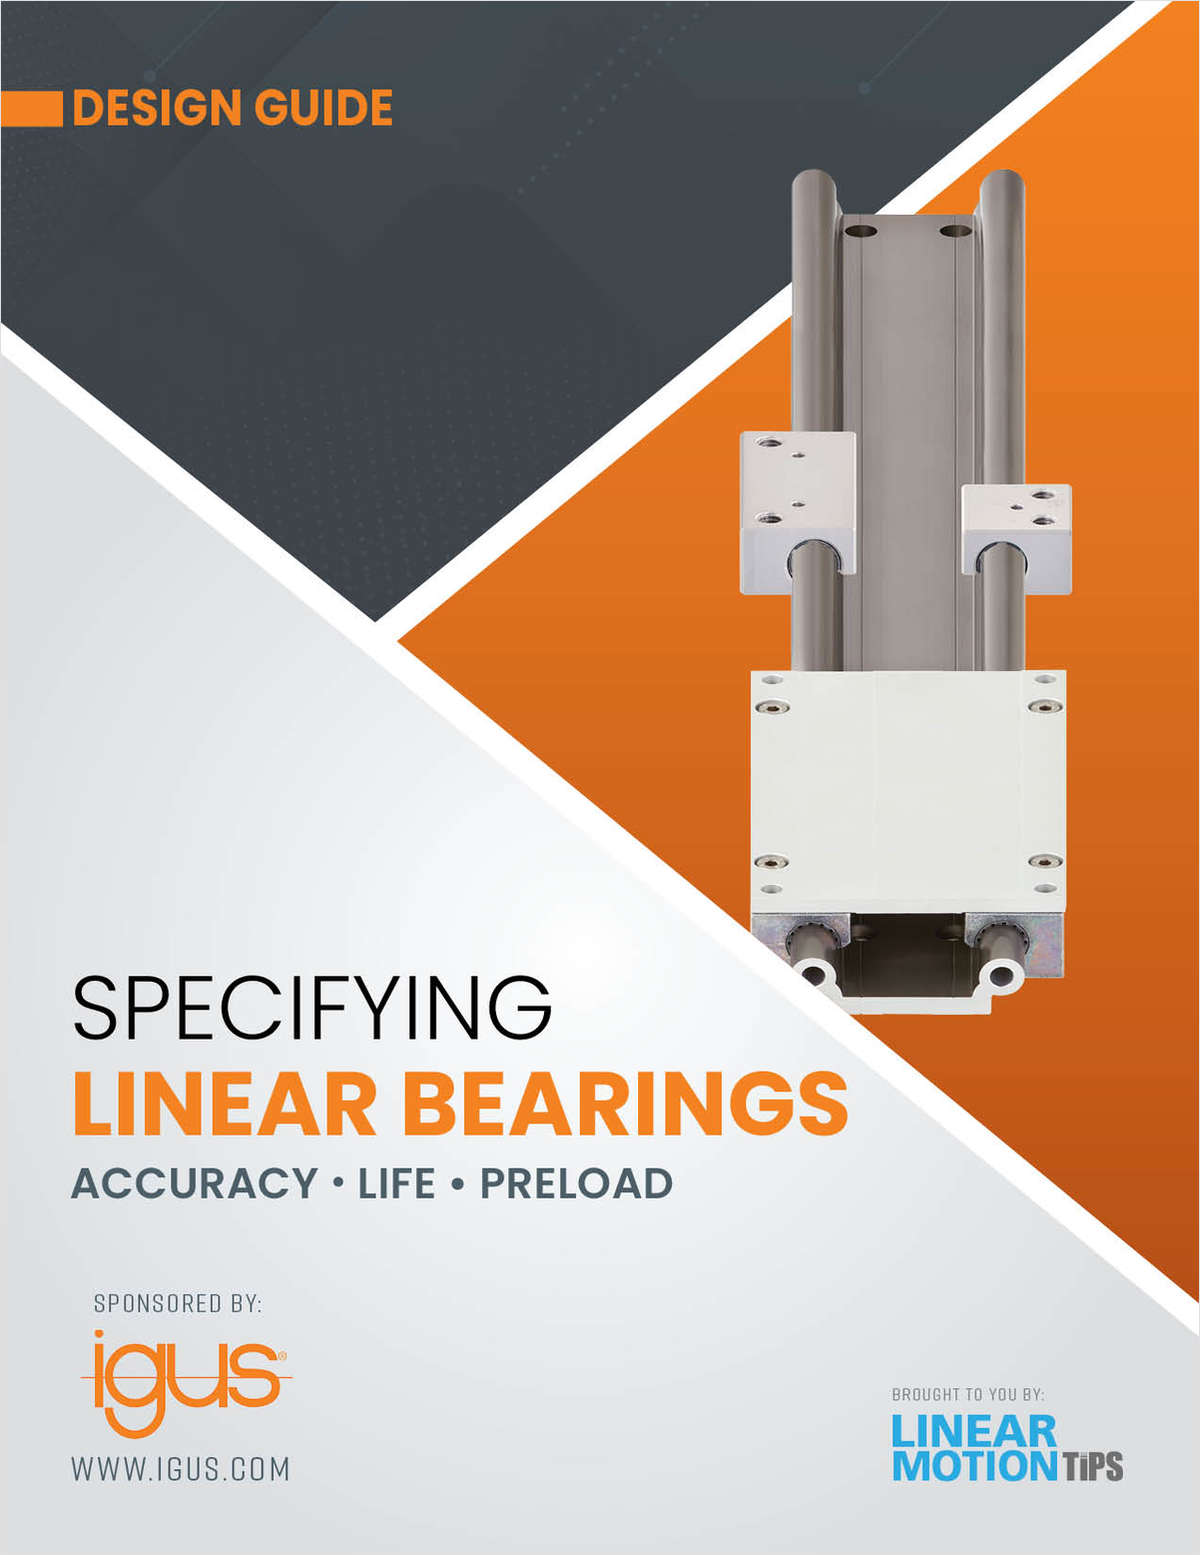 Design Guide on Specifying Linear Bearings